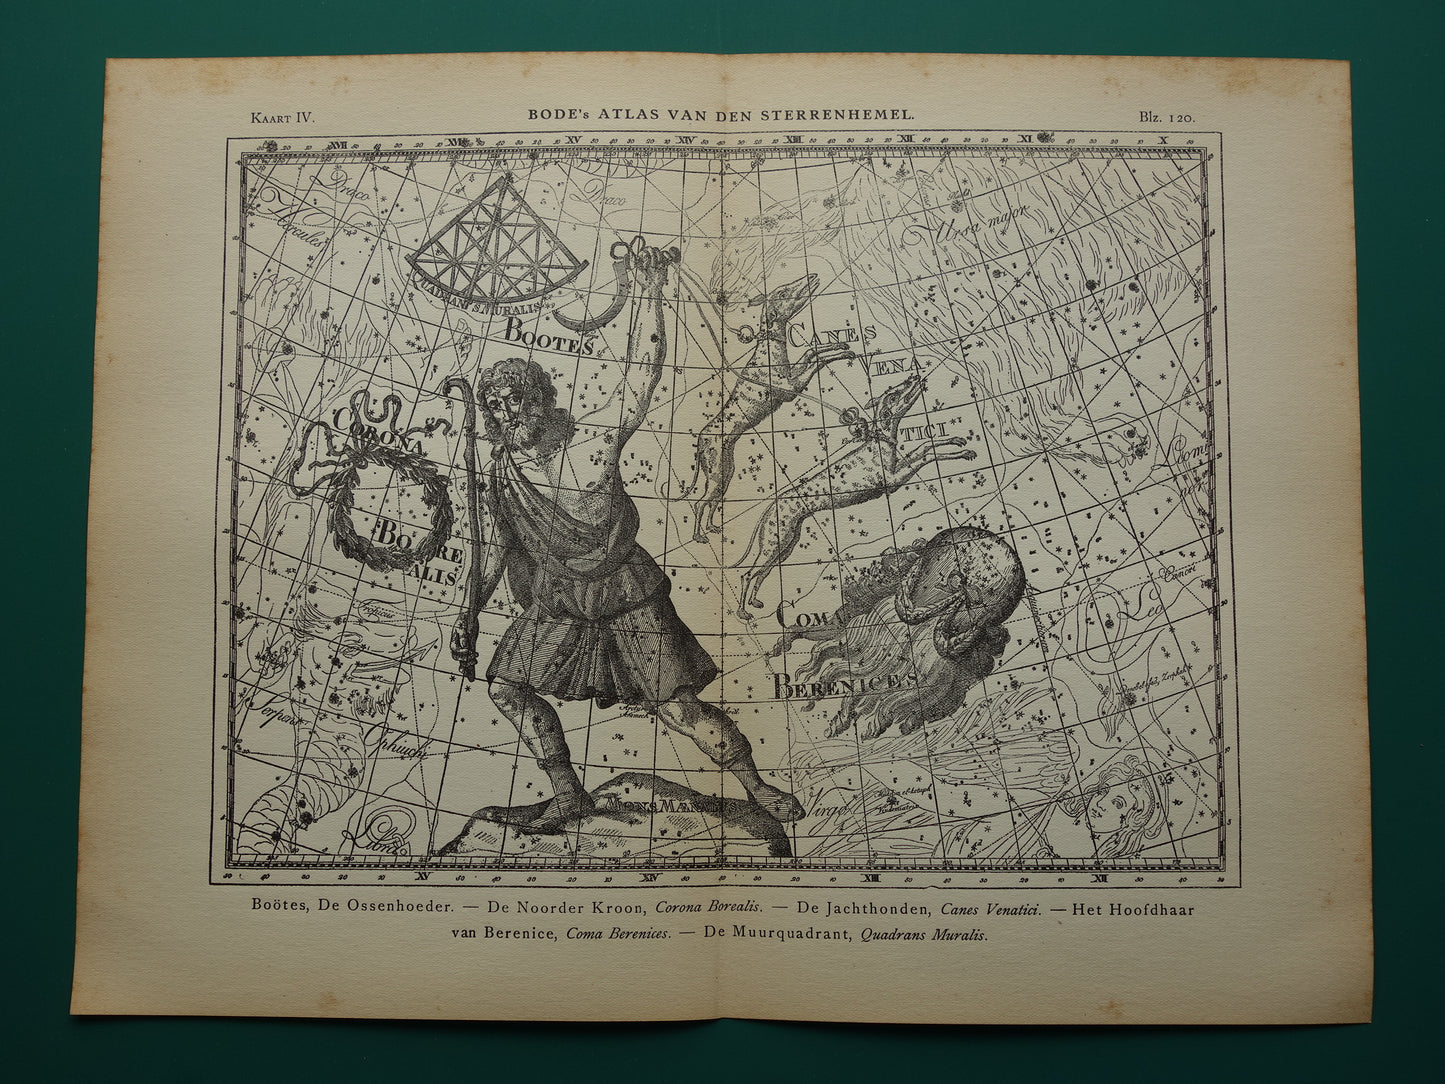 Antieke ASTRONOMIE print set van drie 3 oude sterrenkaart prints - Vintage Pegasus Auriga Boötes astrologie sterrenbeeld prints noordelijke hemel